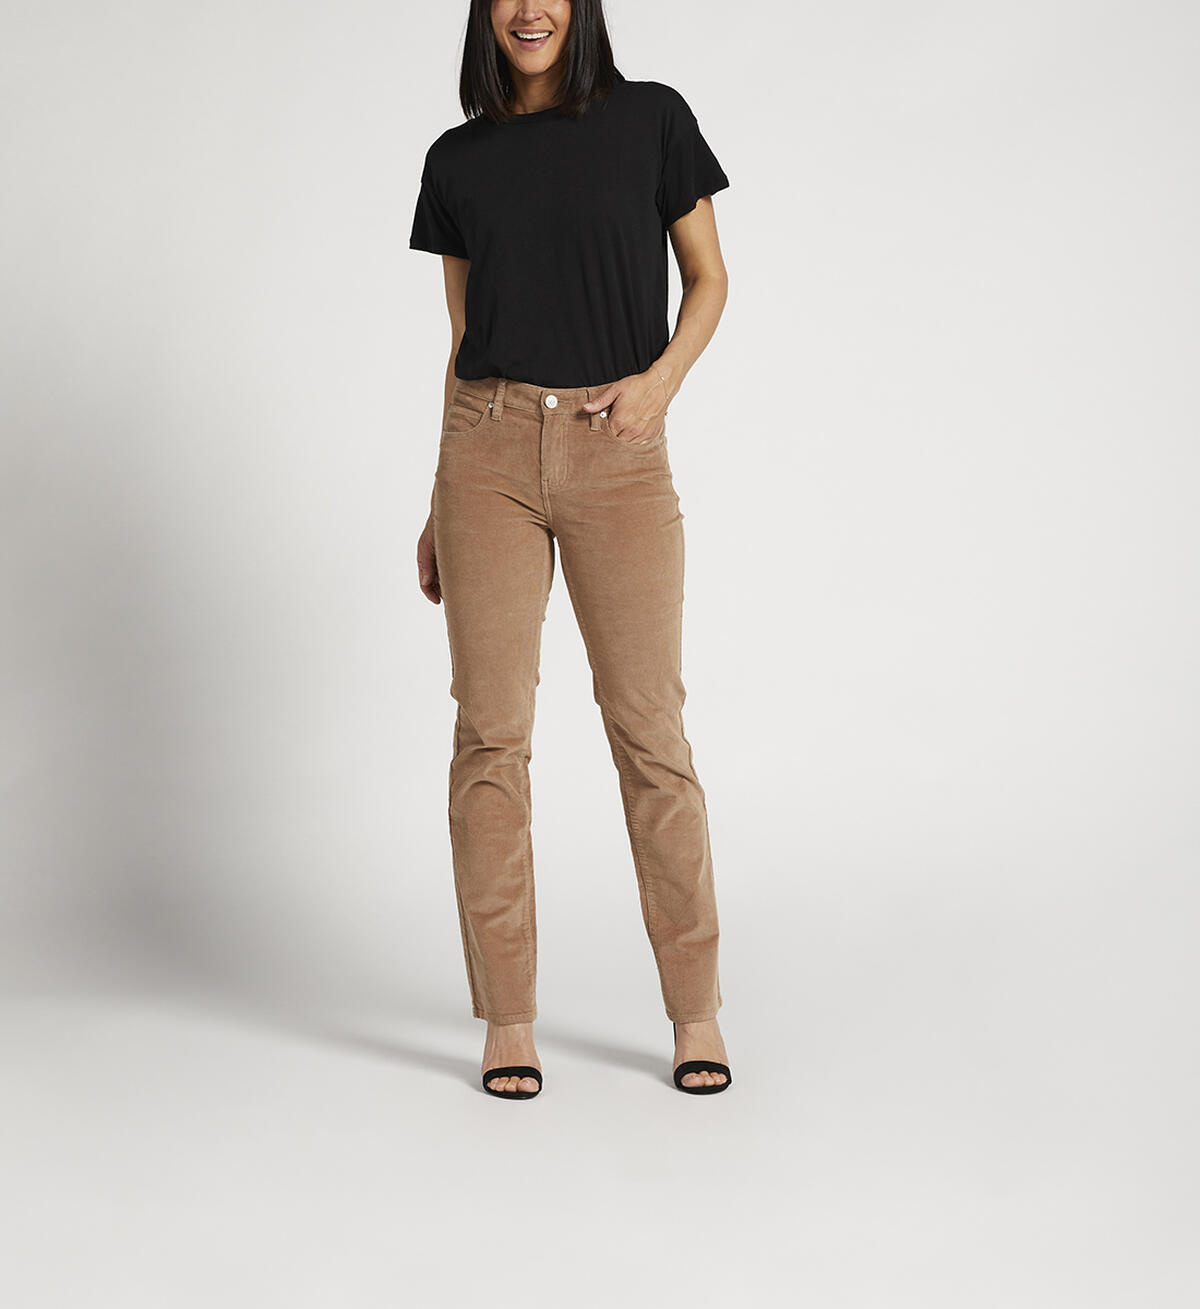 Ankle-length Corduroy Pants - Burgundy - Ladies | H&M US #corduroy #pants  #outfit #work #busi… | Business casual outfits for work, Maroon pants  outfit, Maroon pants